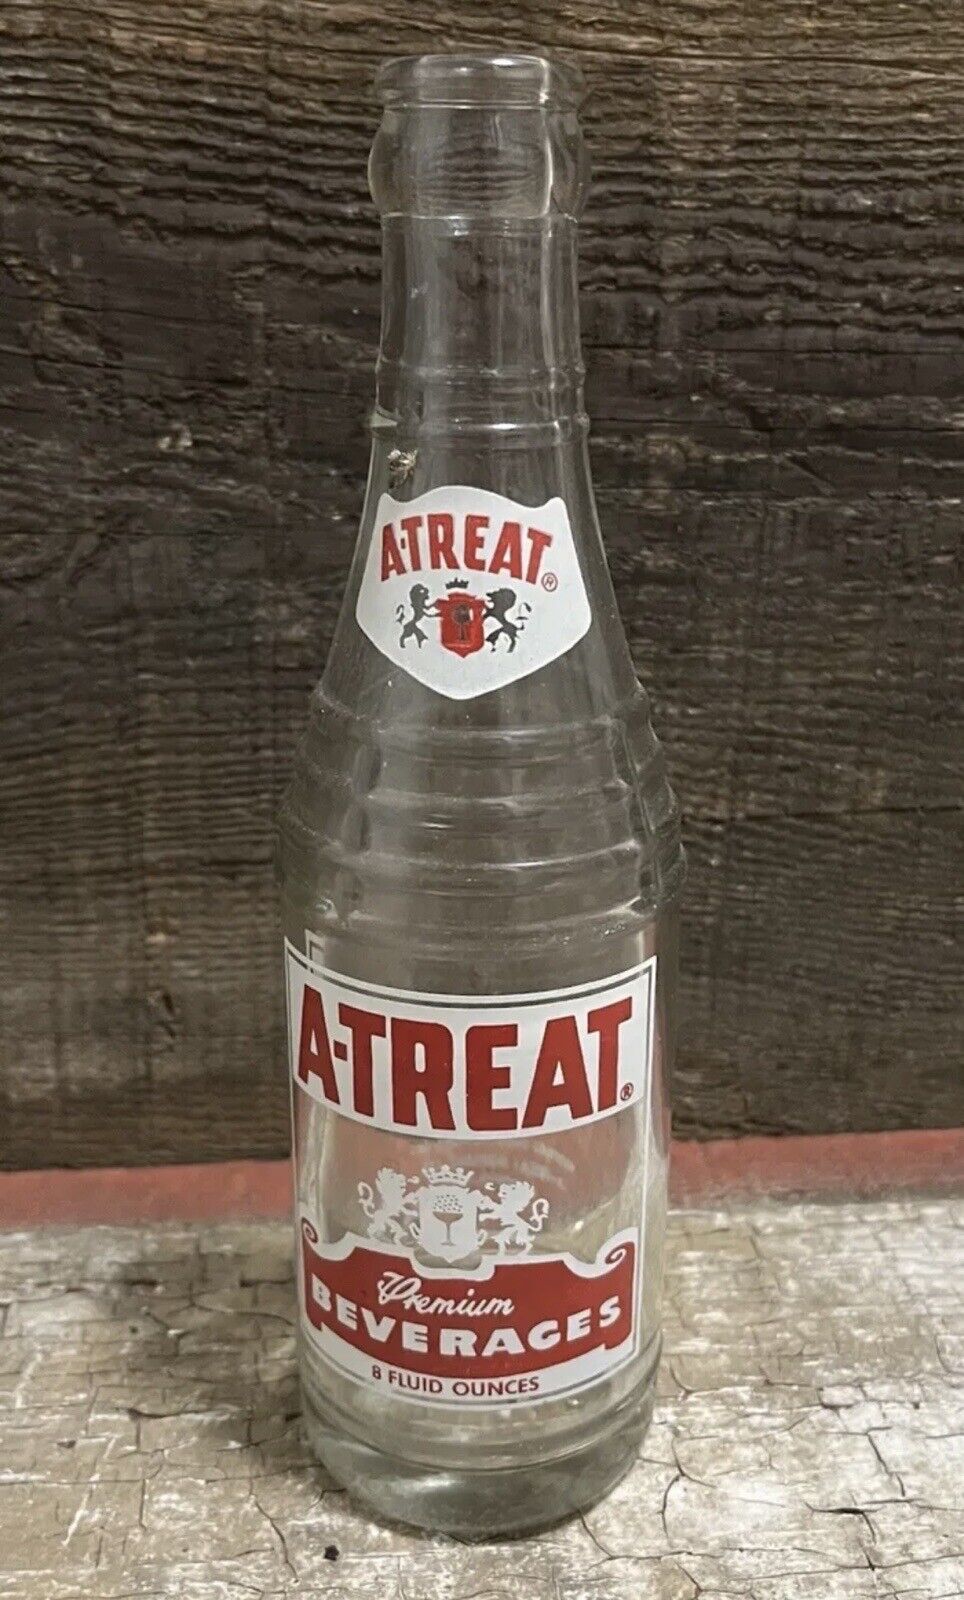 A-TREAT Premium Beverages 8 oz. Clear Glass Soda Bottle, Allentown, PA